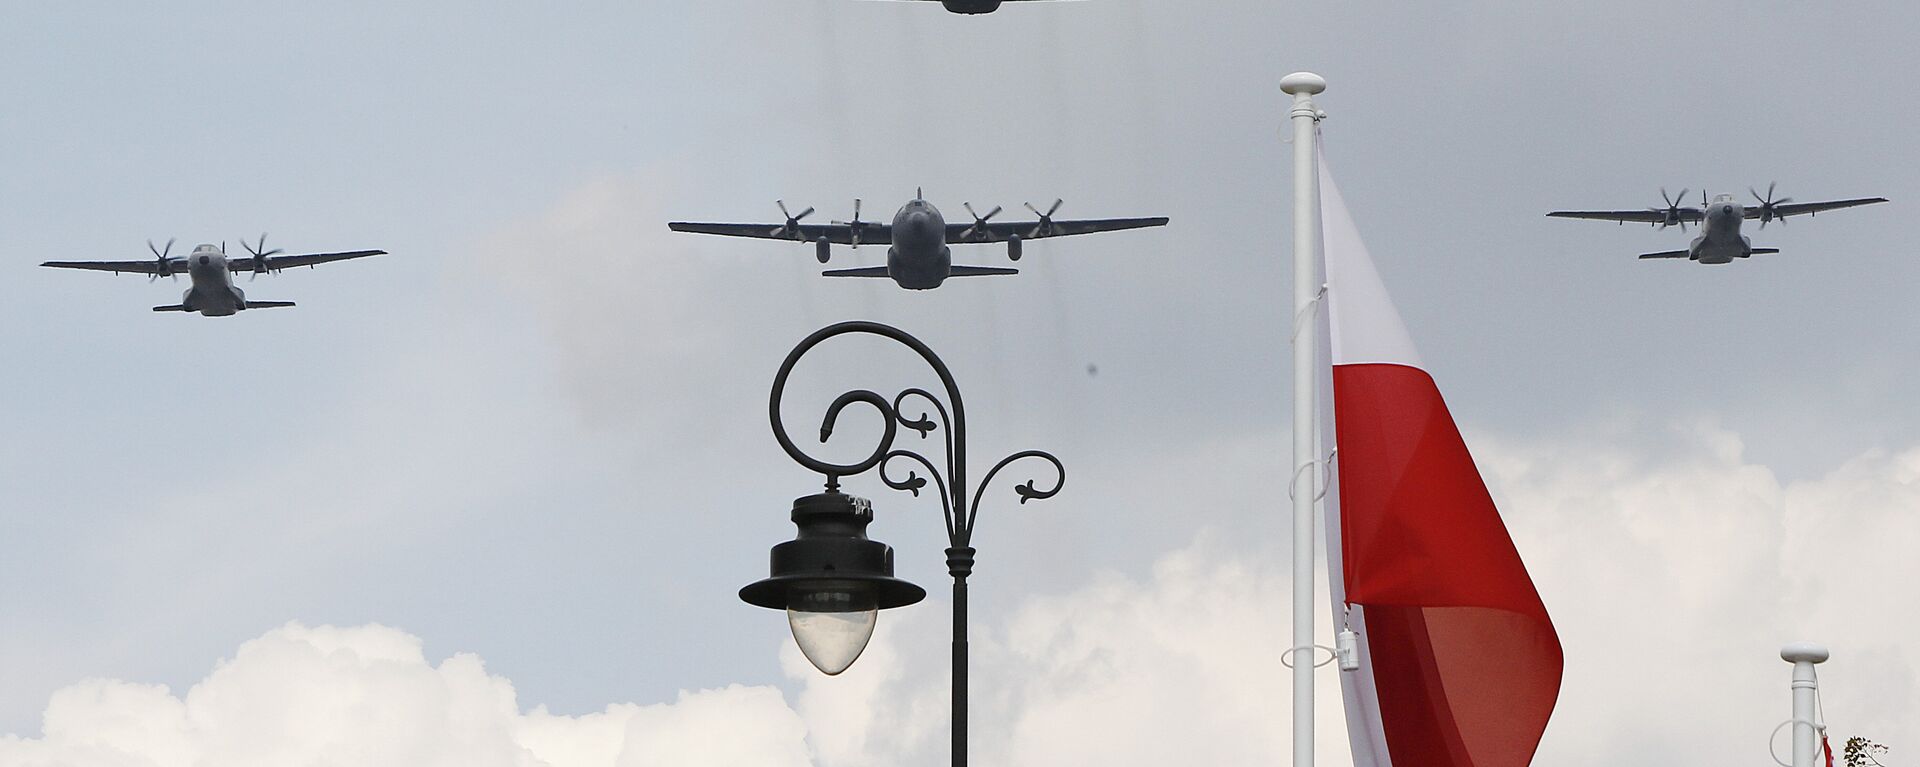 Polish Air Force C-130 Hercules aircraft fly over Poland's national flag during a military parade. - Sputnik International, 1920, 09.06.2022